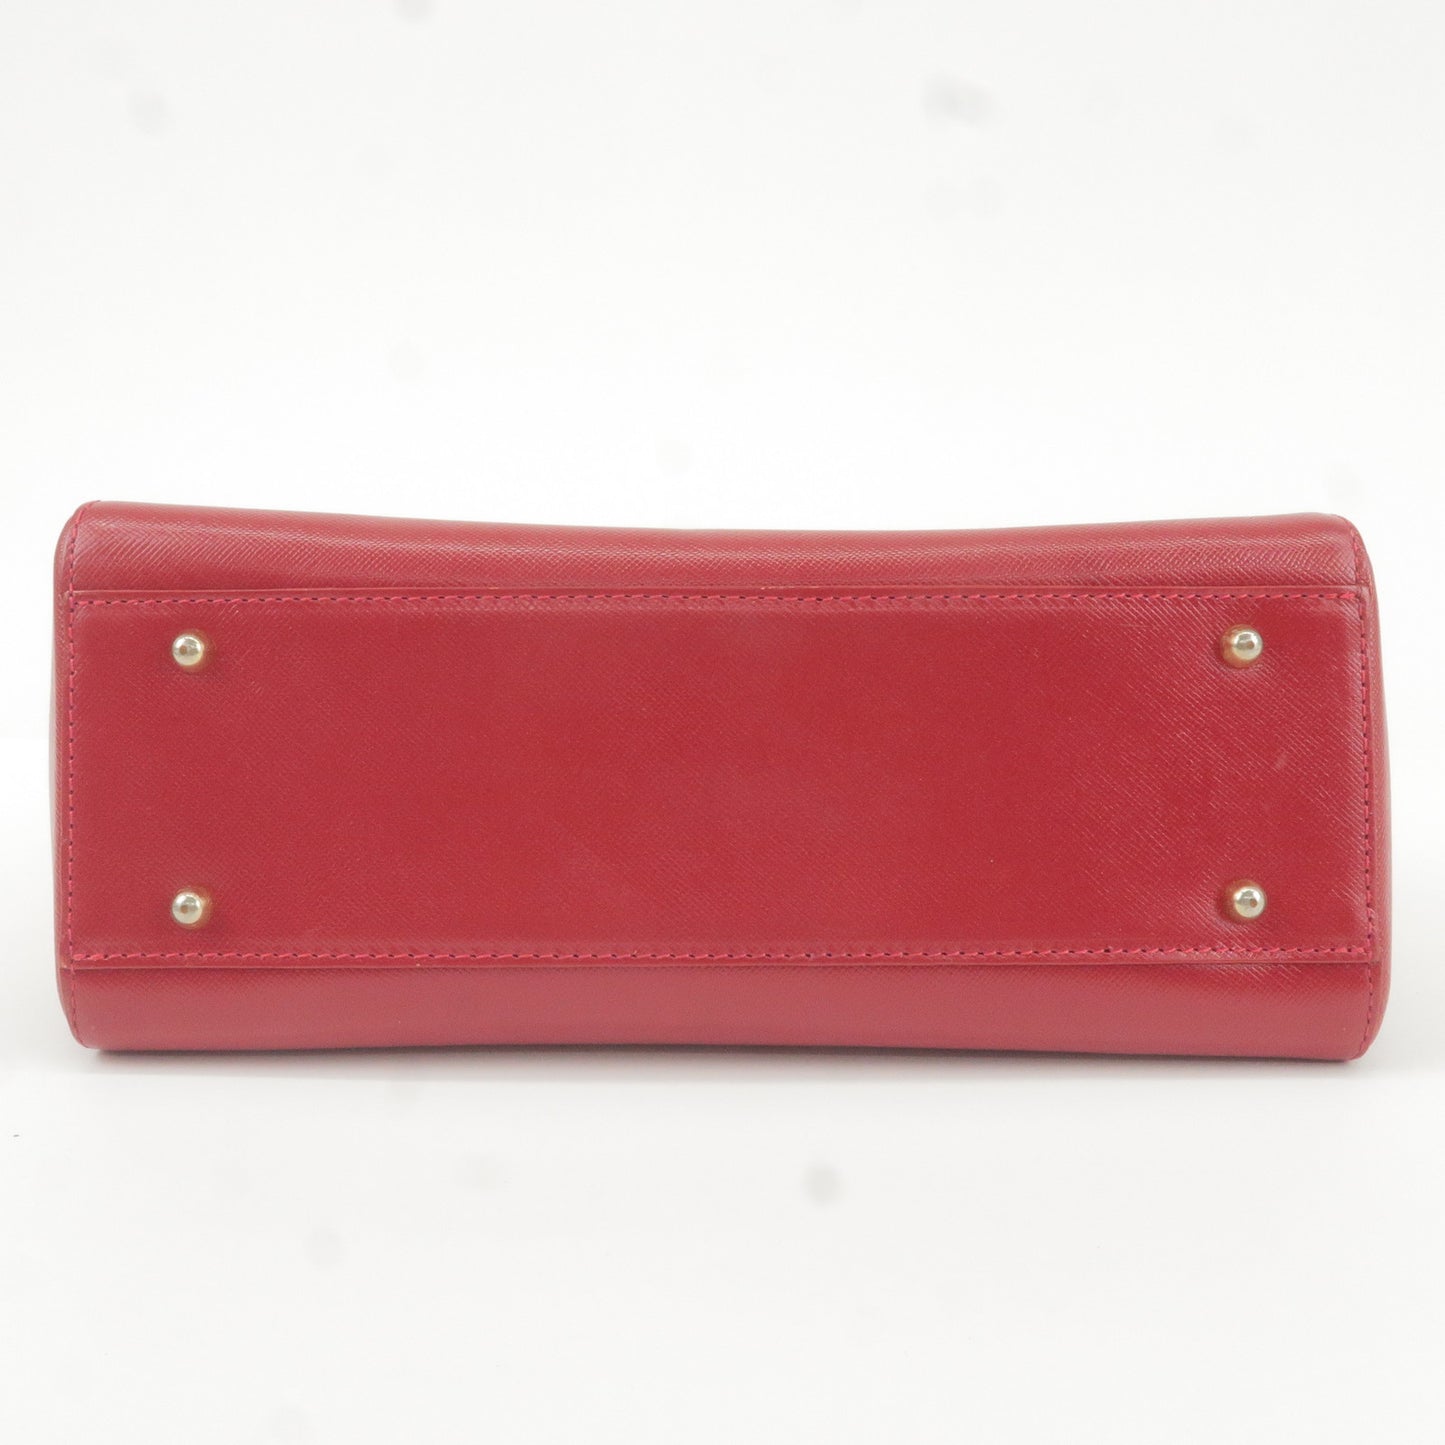 BURBERRY Nova Plaid Canvas Leather Hand Bag Beige Red